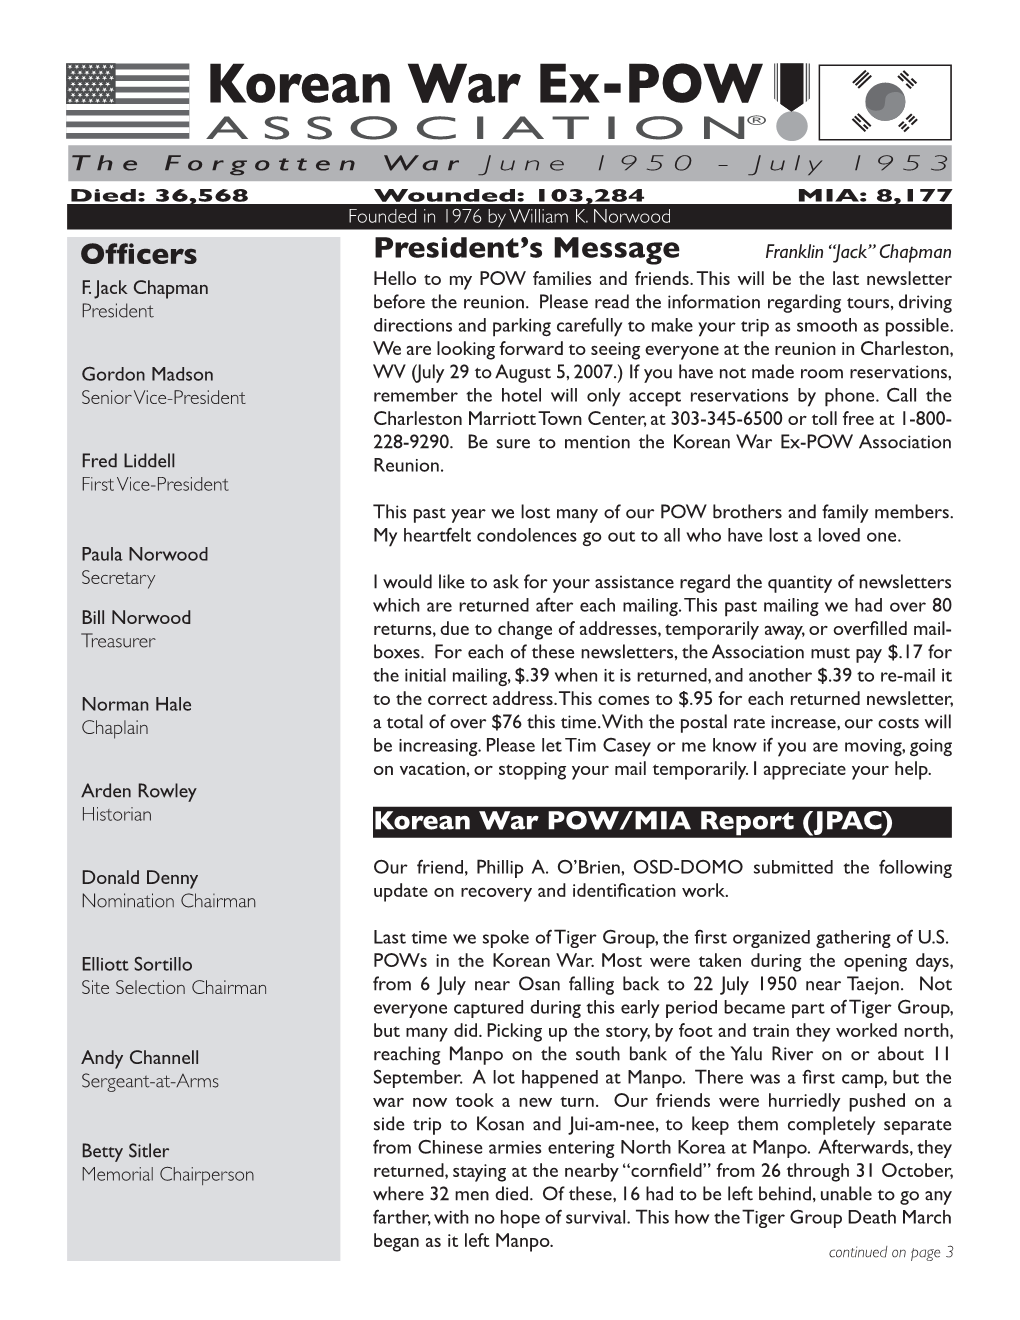 Korean War Ex-POW Association Non-Proﬁt Newsletter - June 2007 Organization US Postage PAID Franklin “Jack” Chapman, President Las Cruces, NM Permit #2086